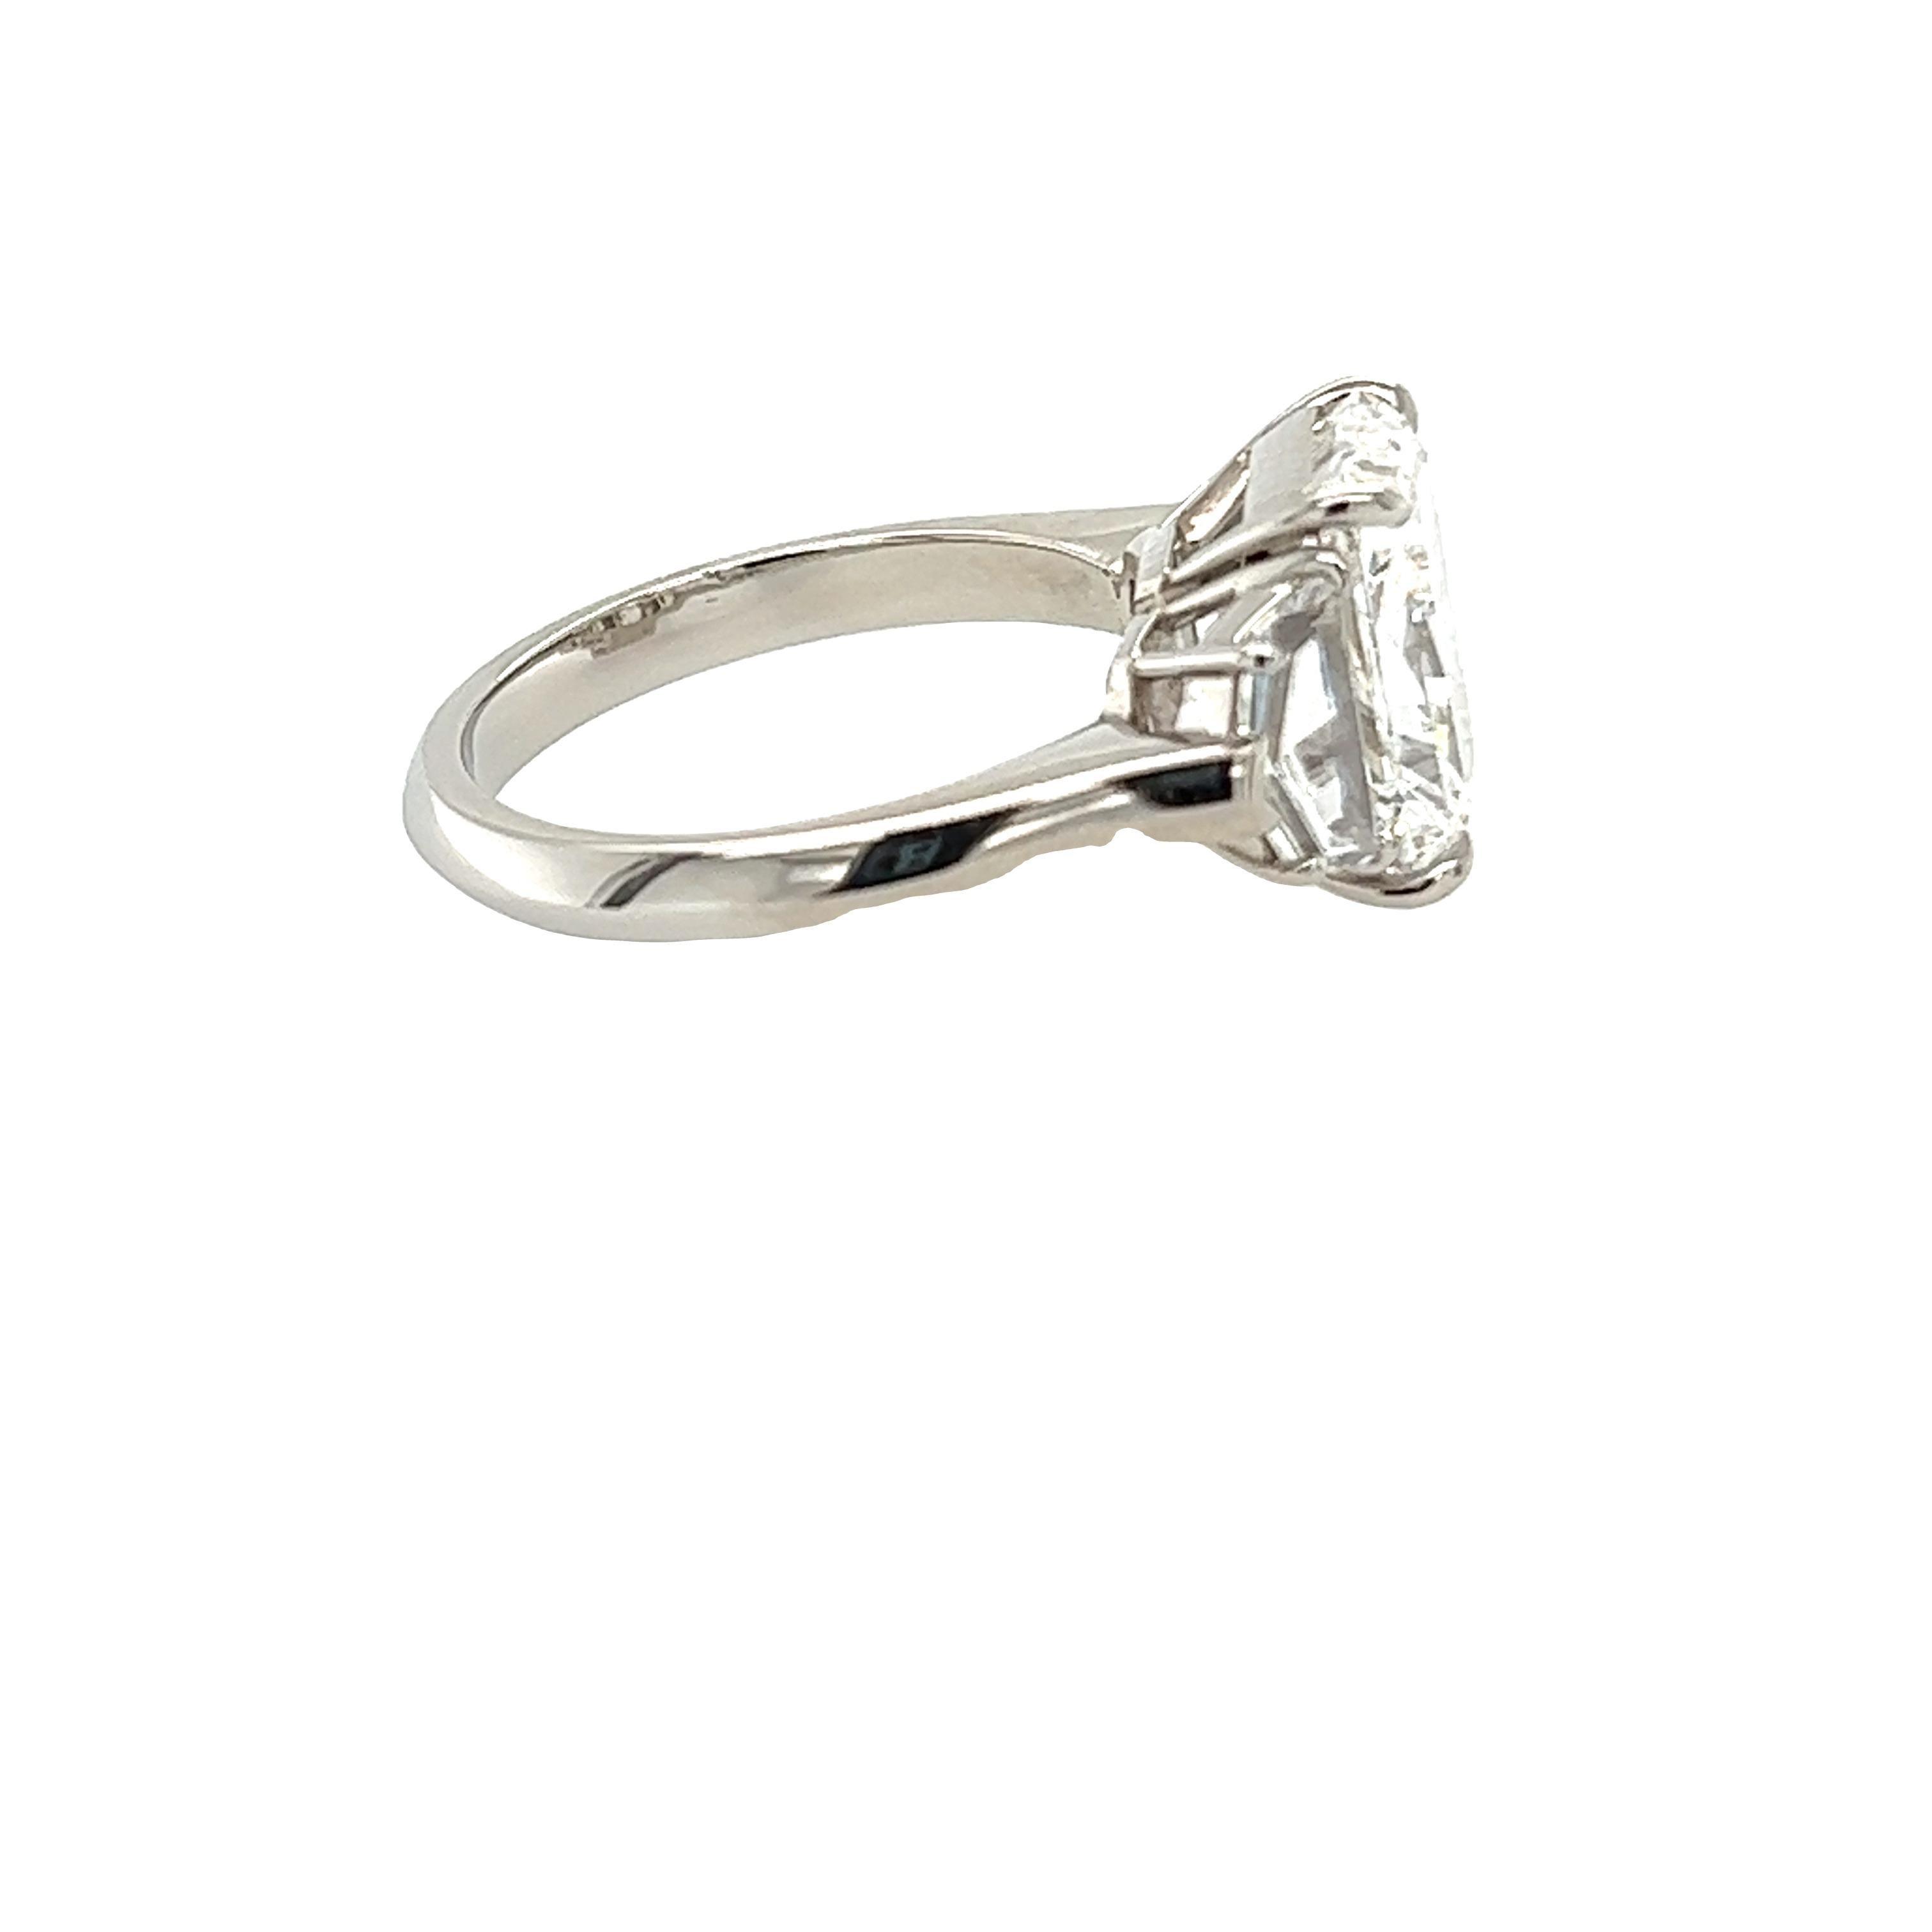 5 carat radiant cut diamond ring